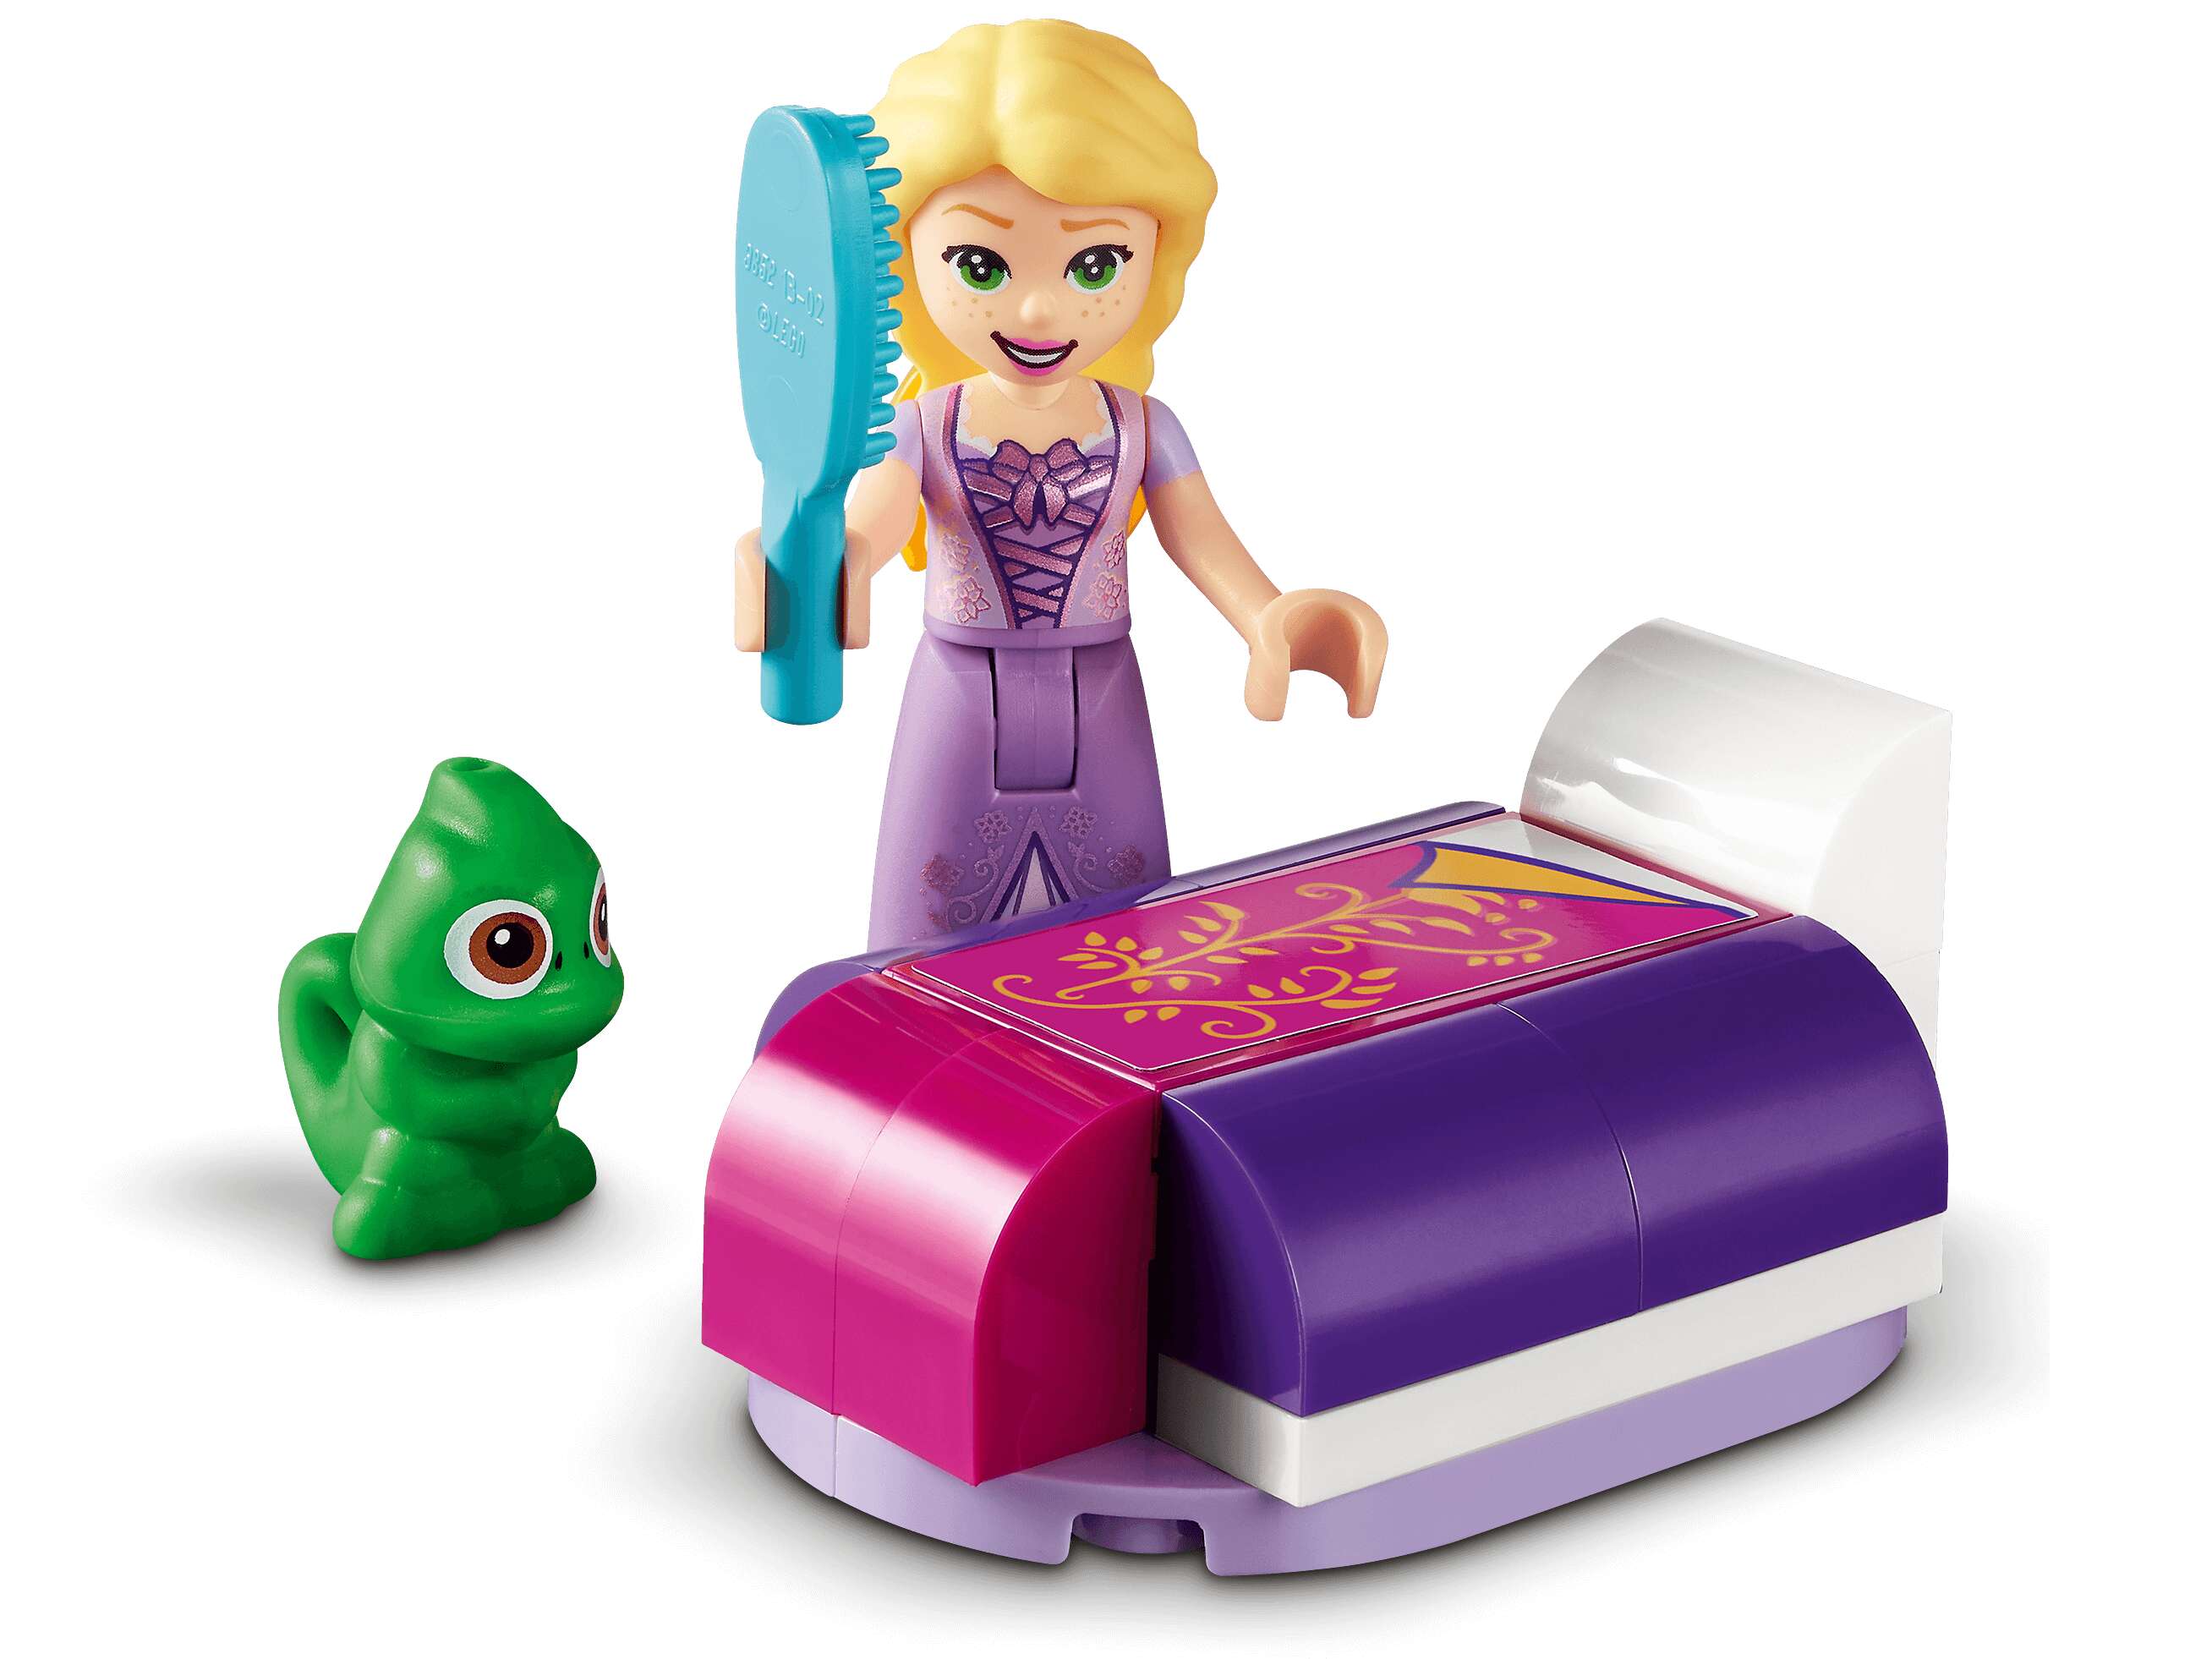 LEGO 43187 Disney Princess Rapunzels Turm, aus dem Film Rapunzel Neu verföhnt